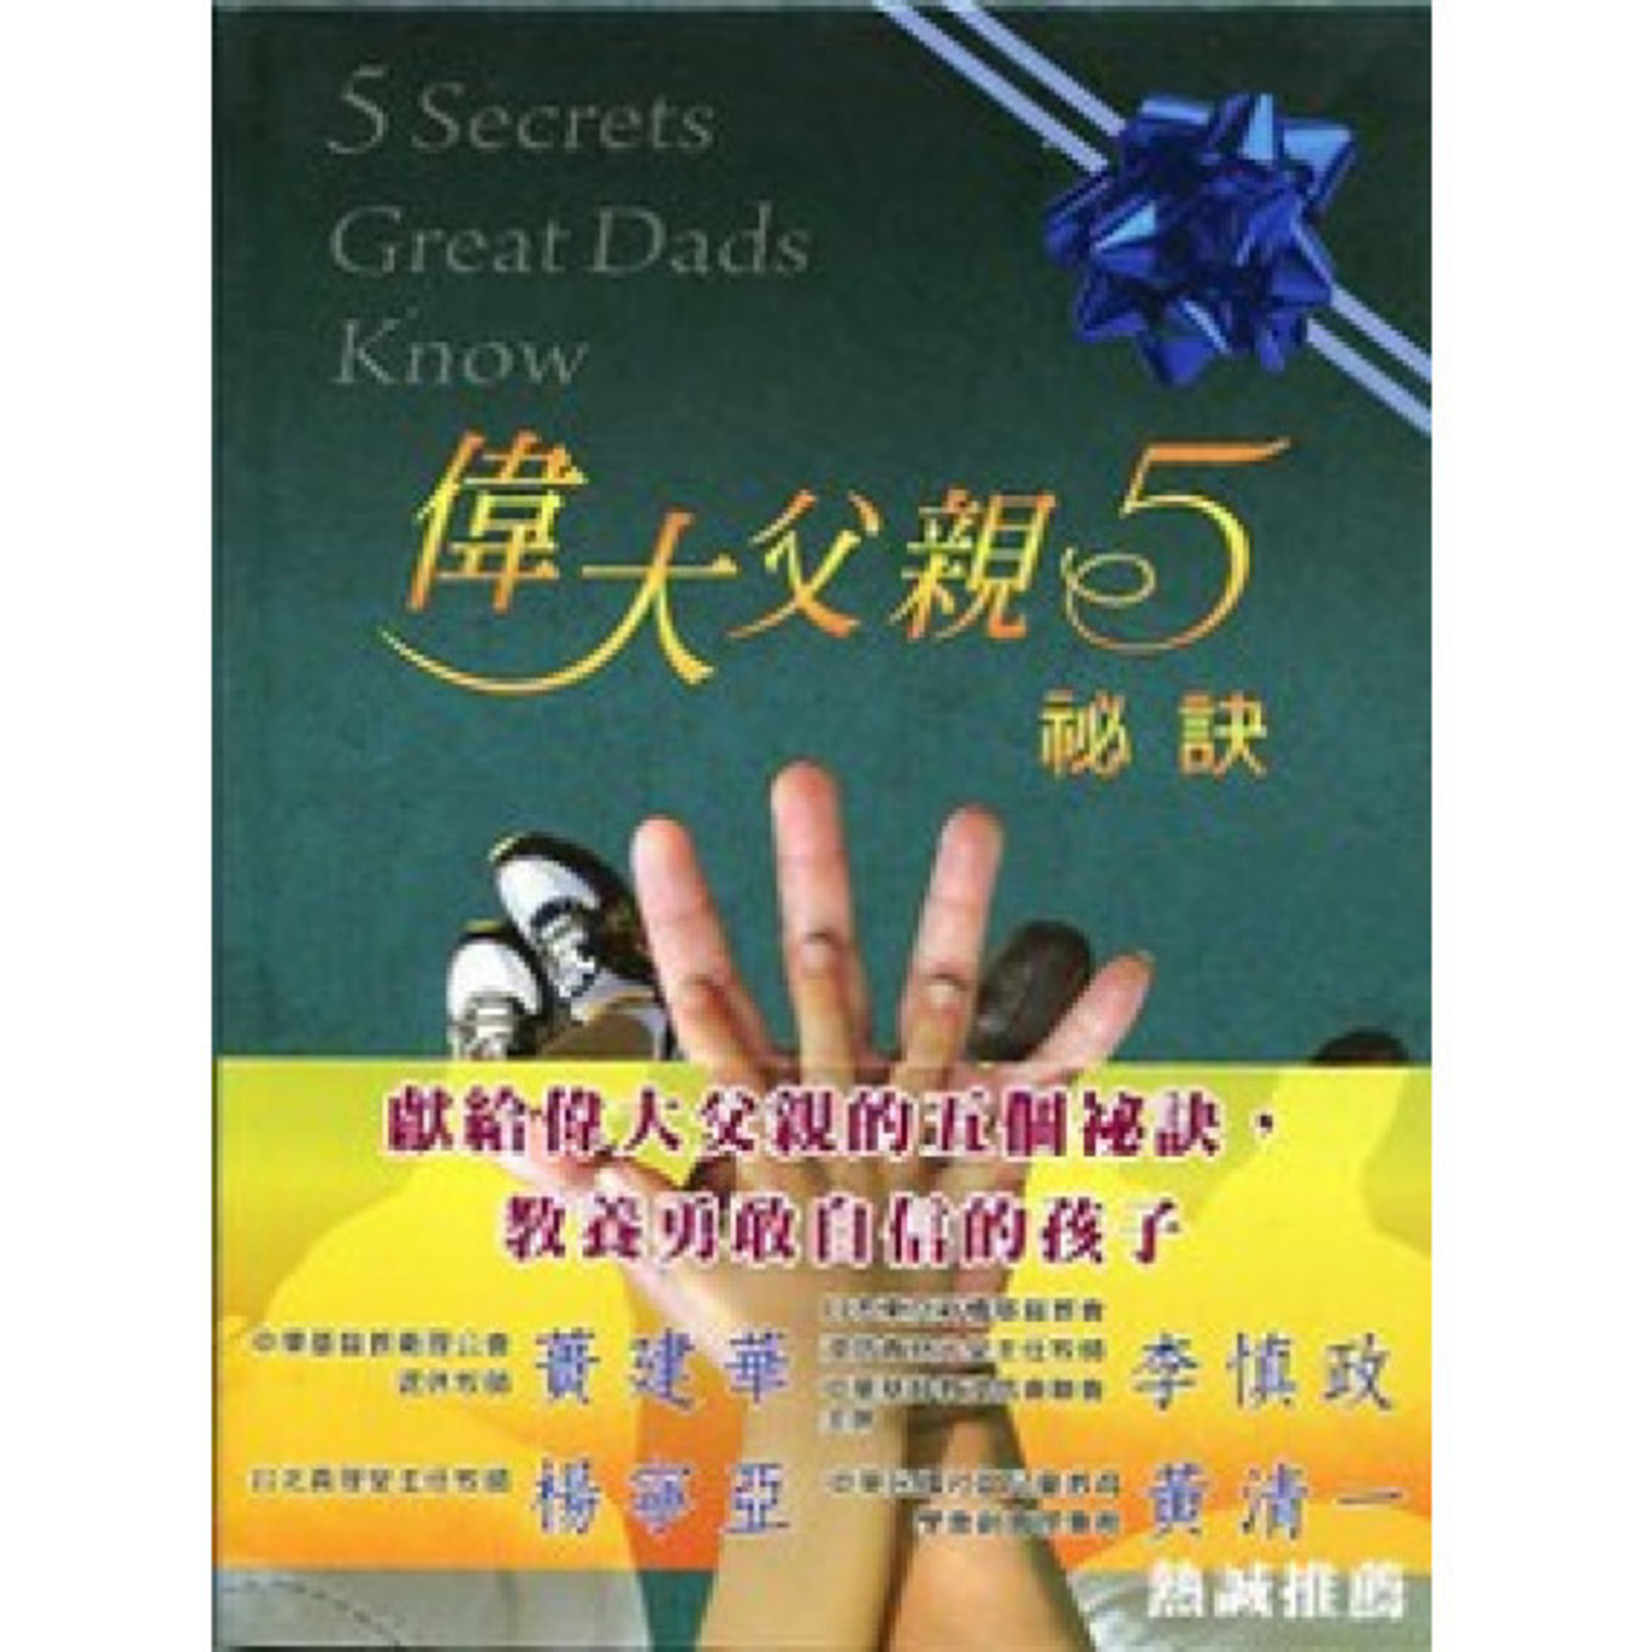 中國主日學協會 China Sunday School Association 偉大父親5祕訣 5 Secrets Great Dads know